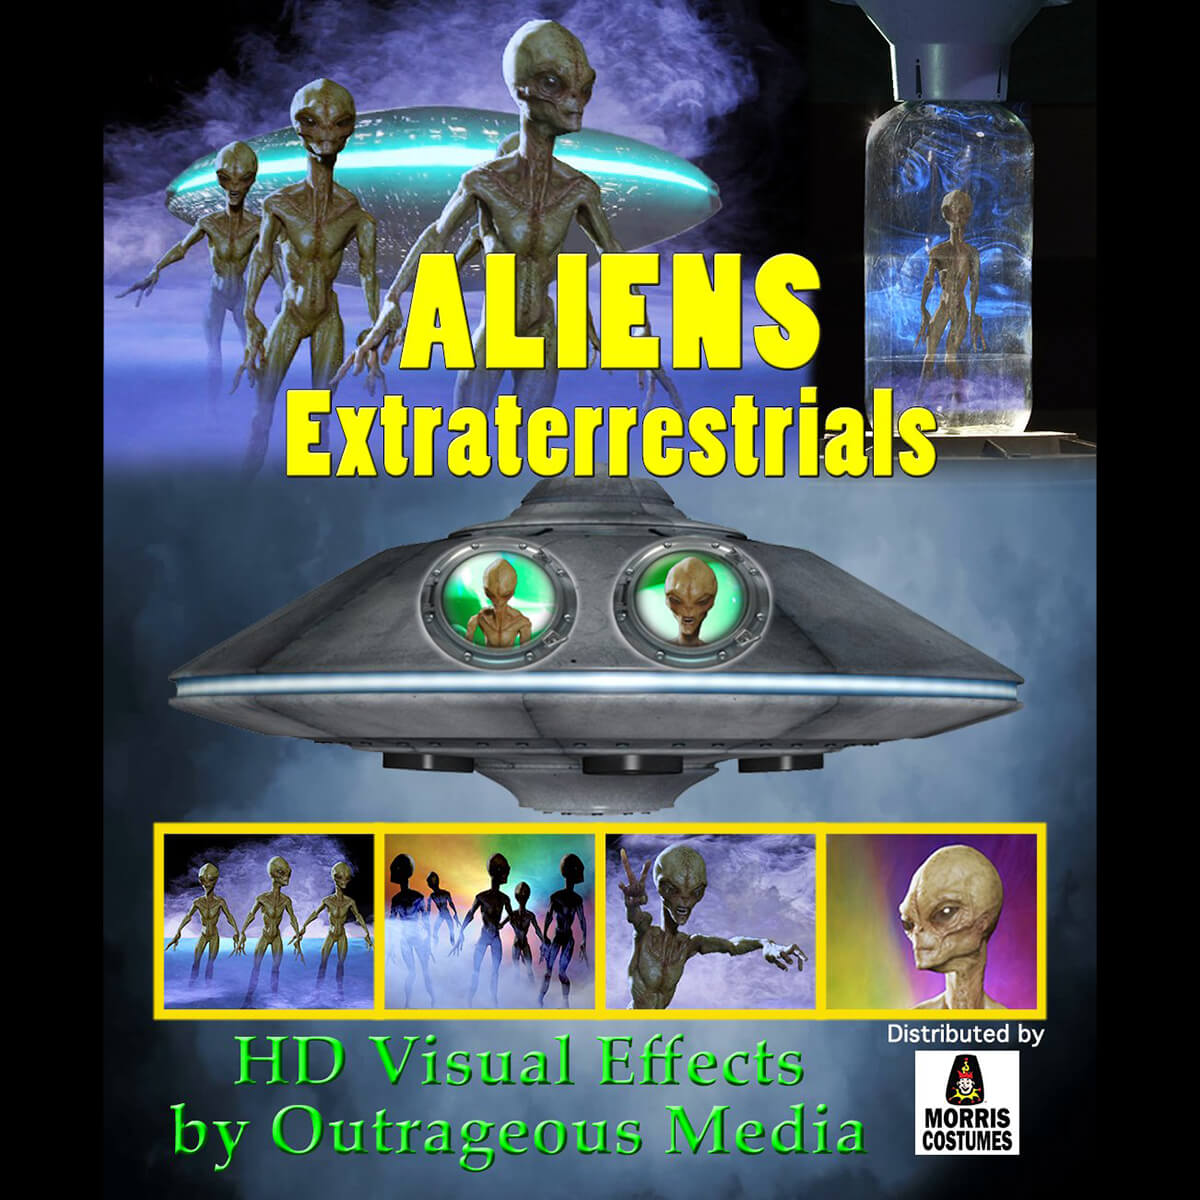 Aliens Extraterrestrials Projection USB